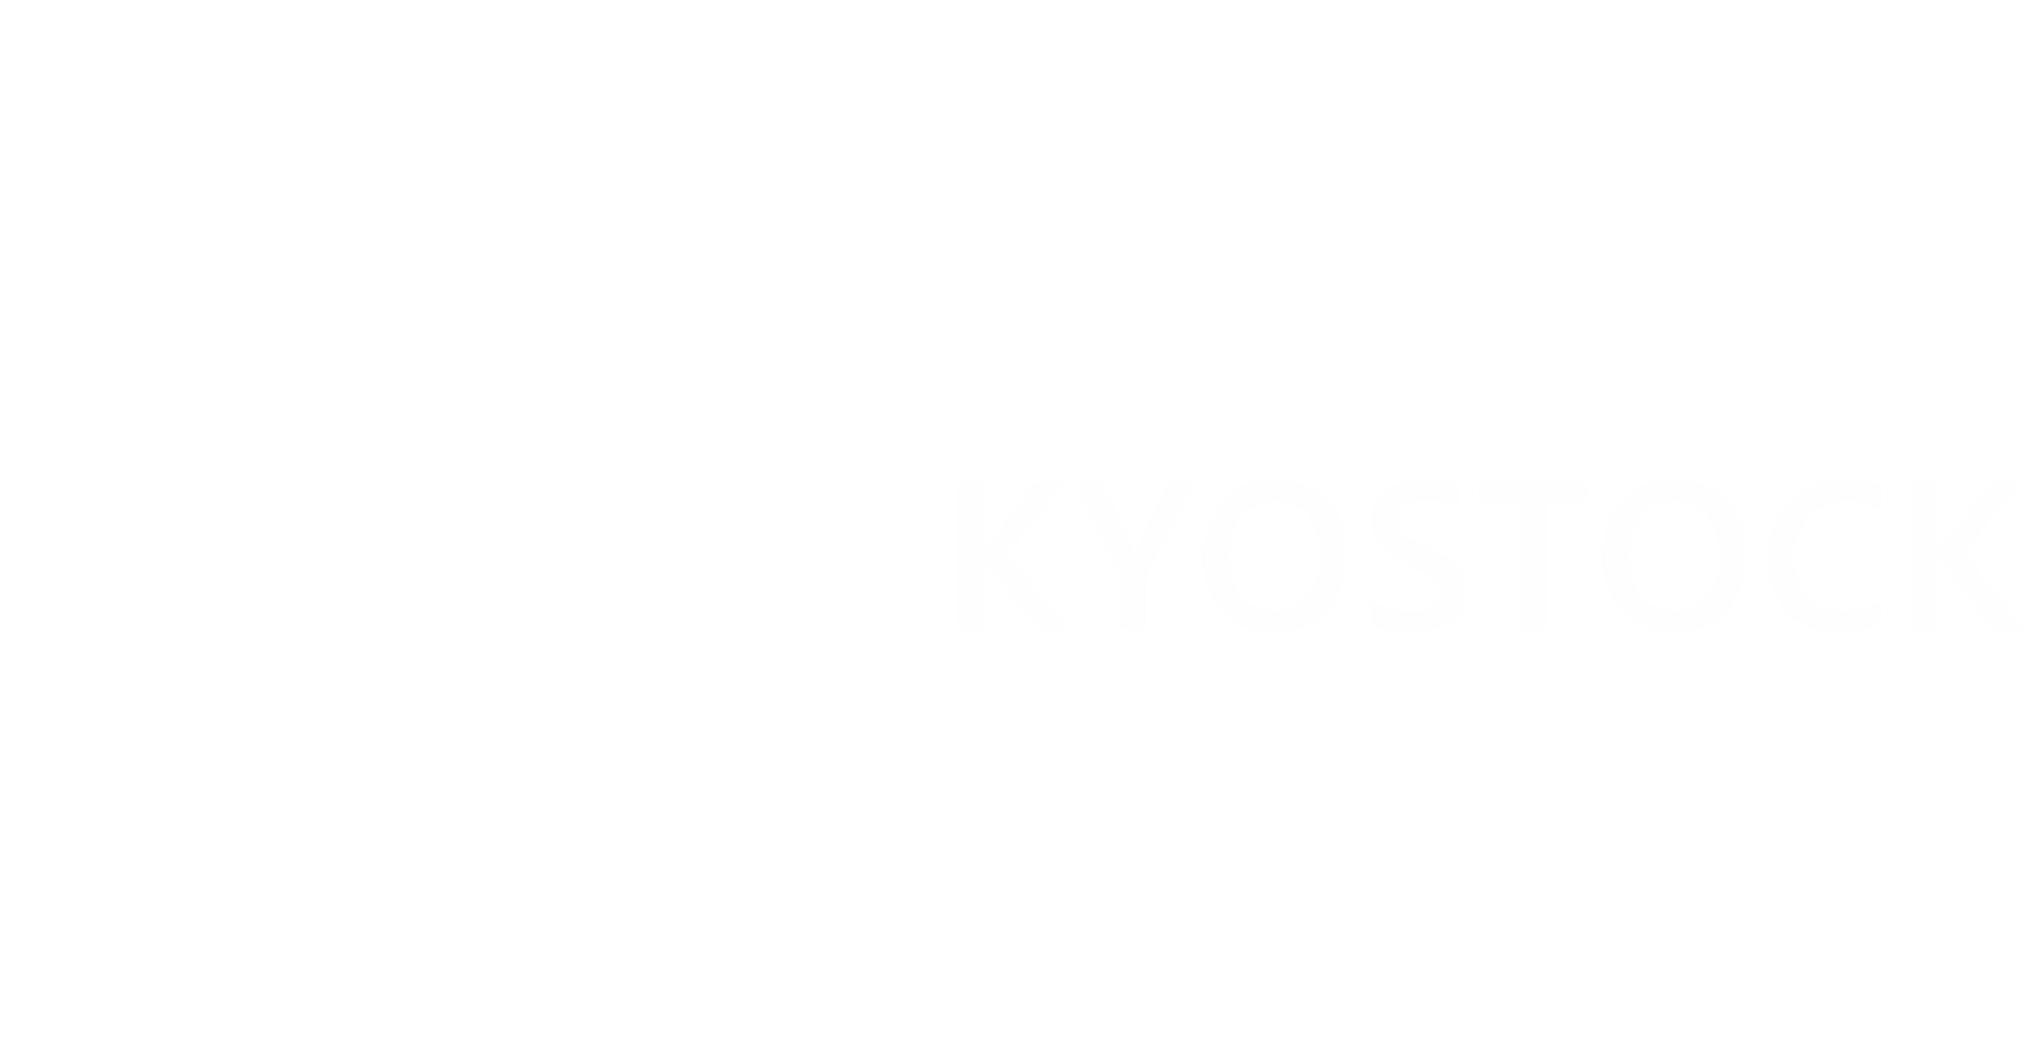 Kyostock